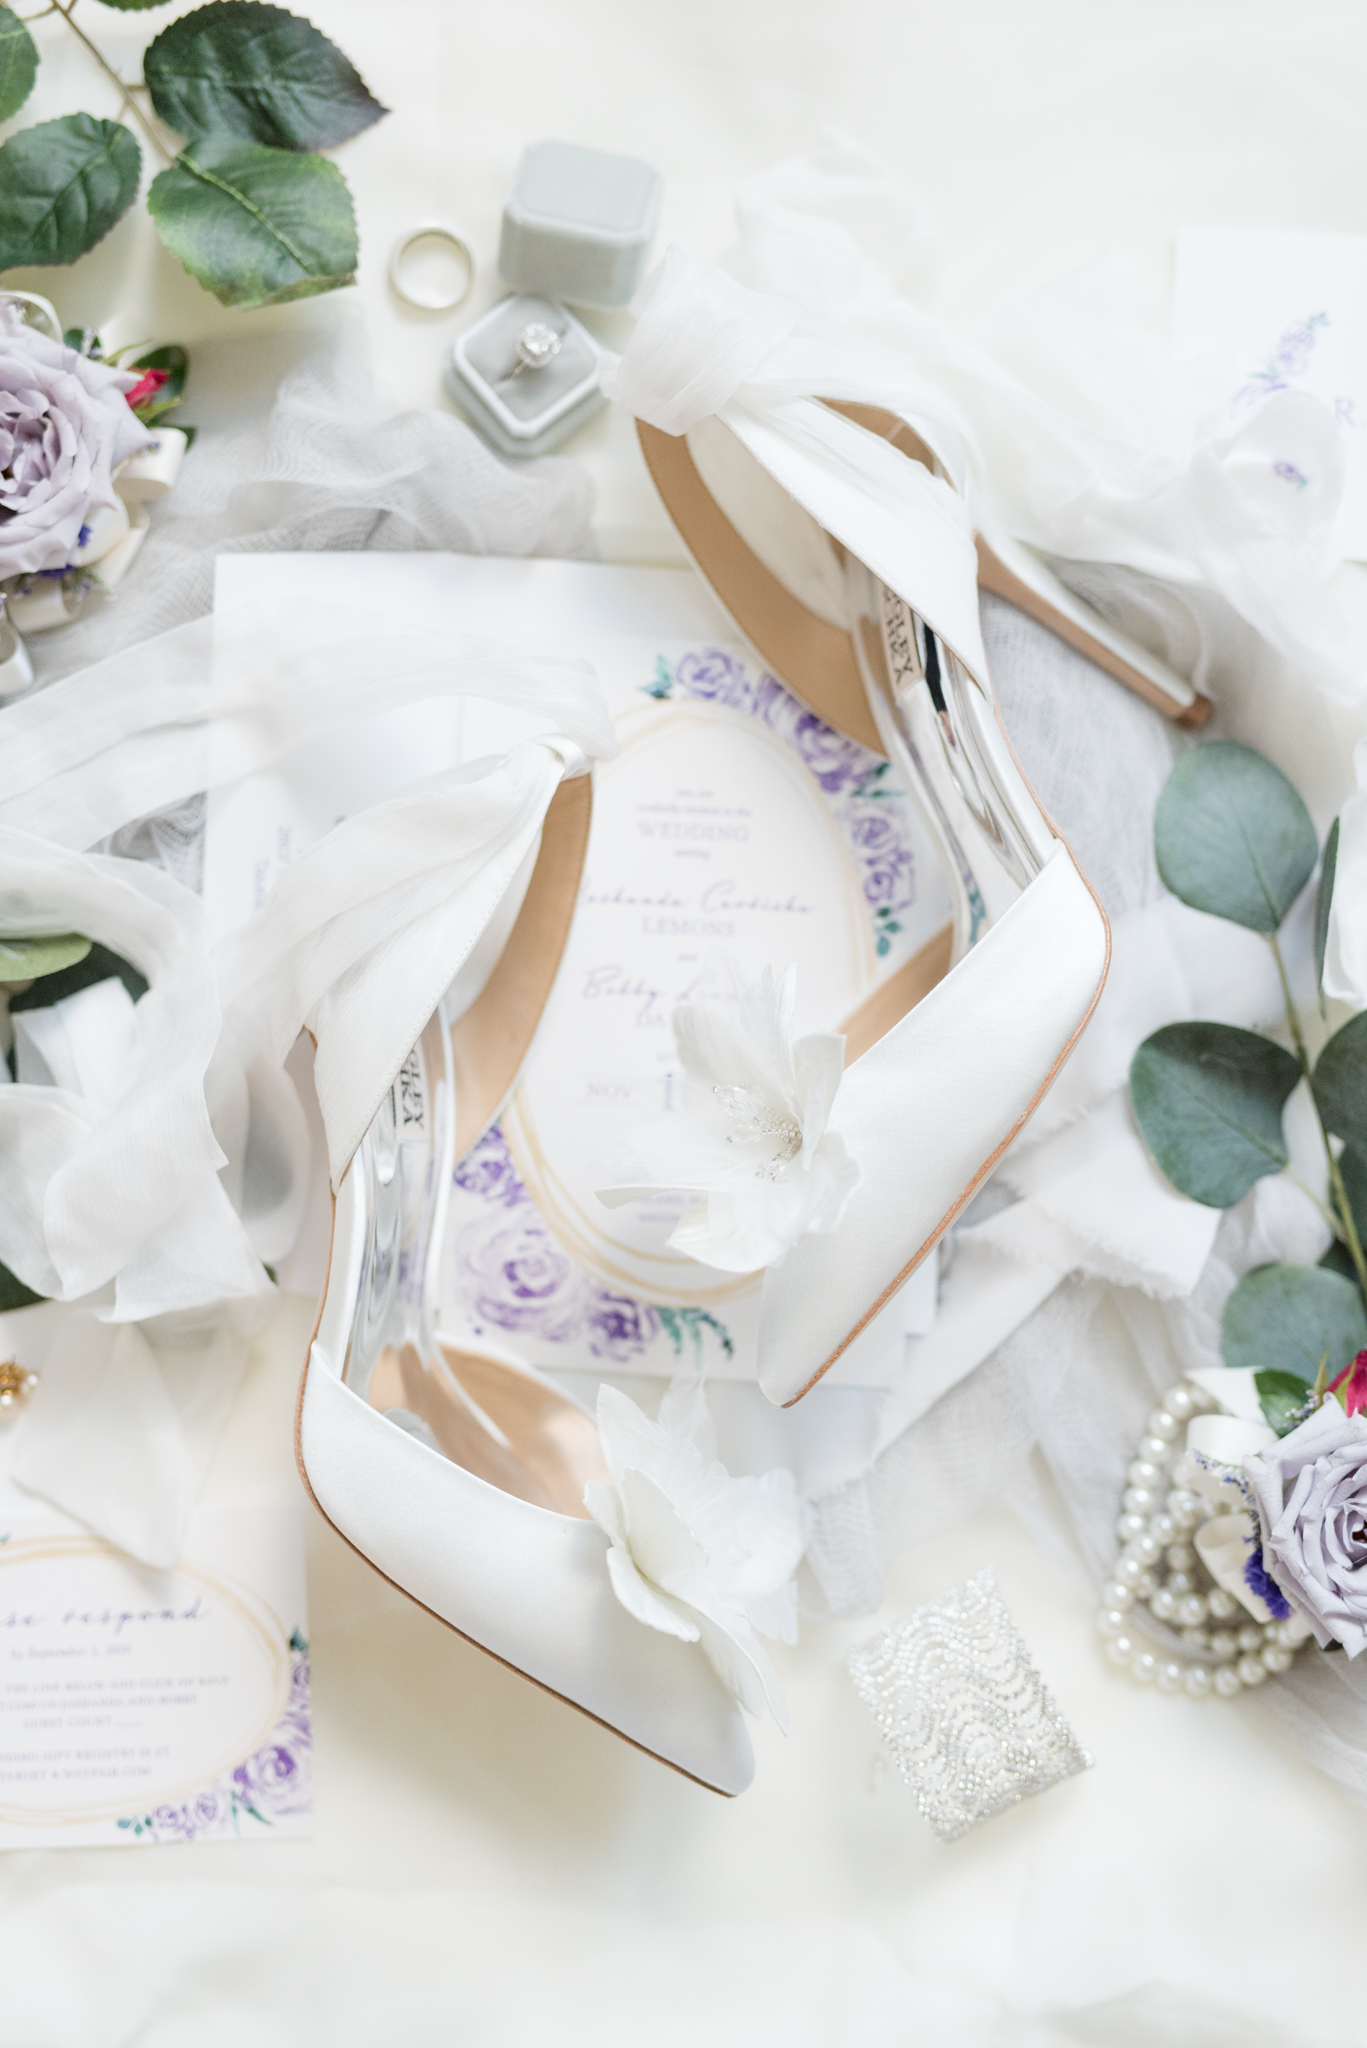 Brides wedding shoes sit on wedding invitation.